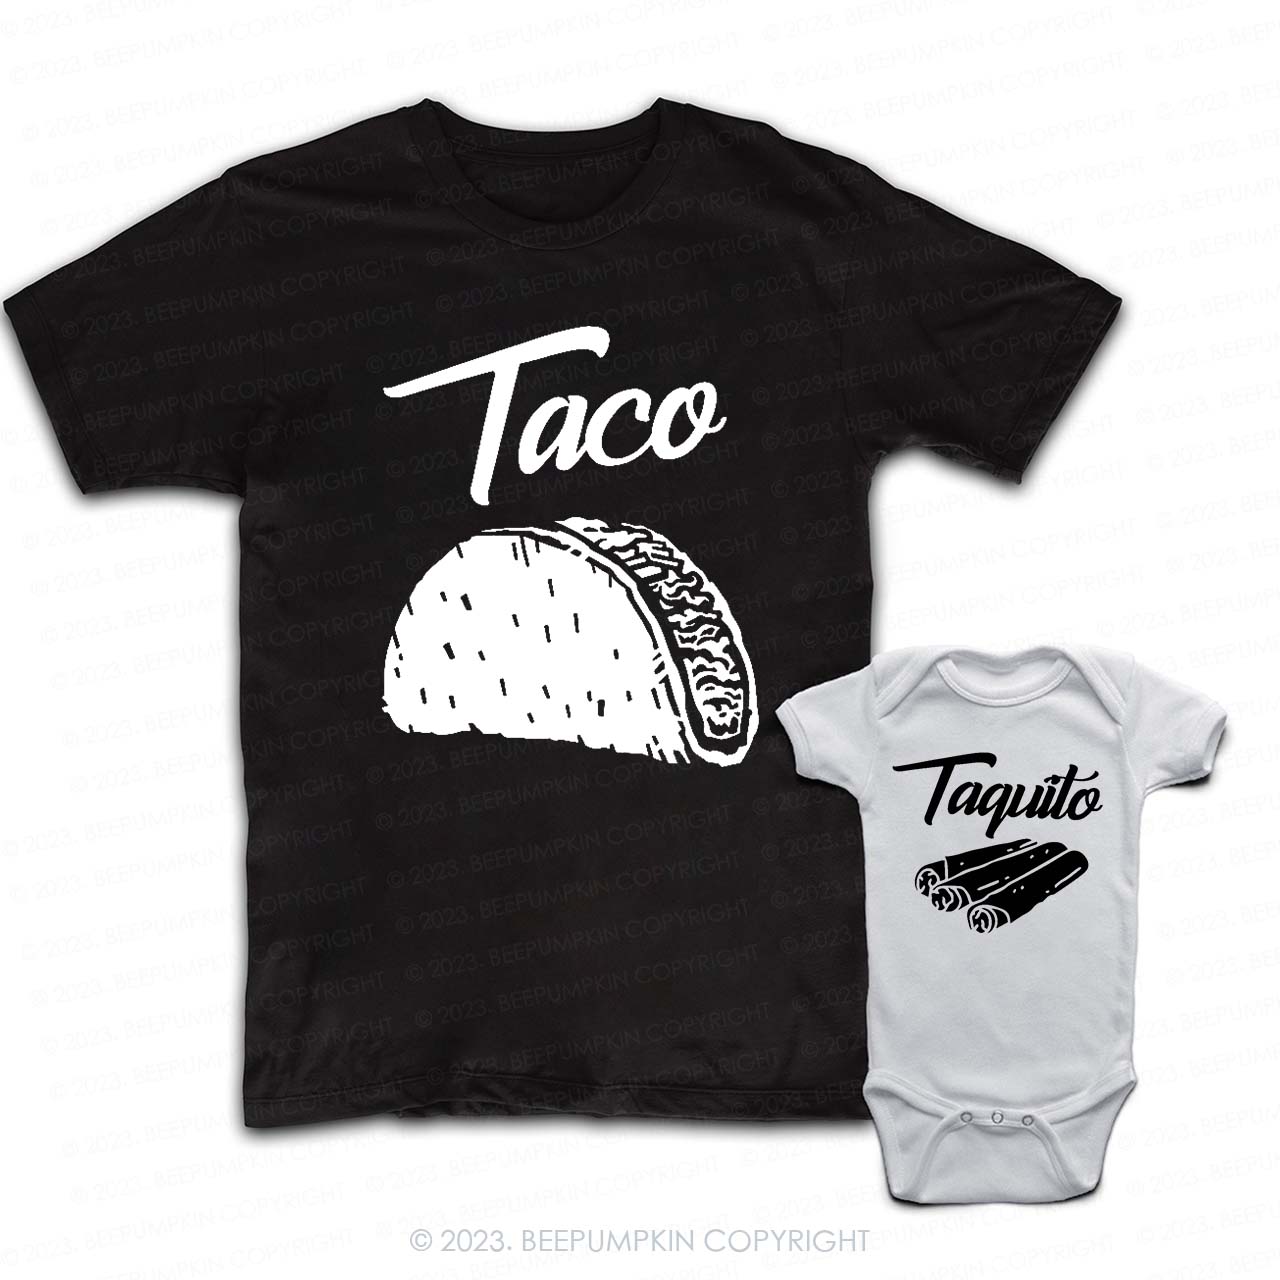 Dad & Me Matching T-Shirts –Taco & Taquito